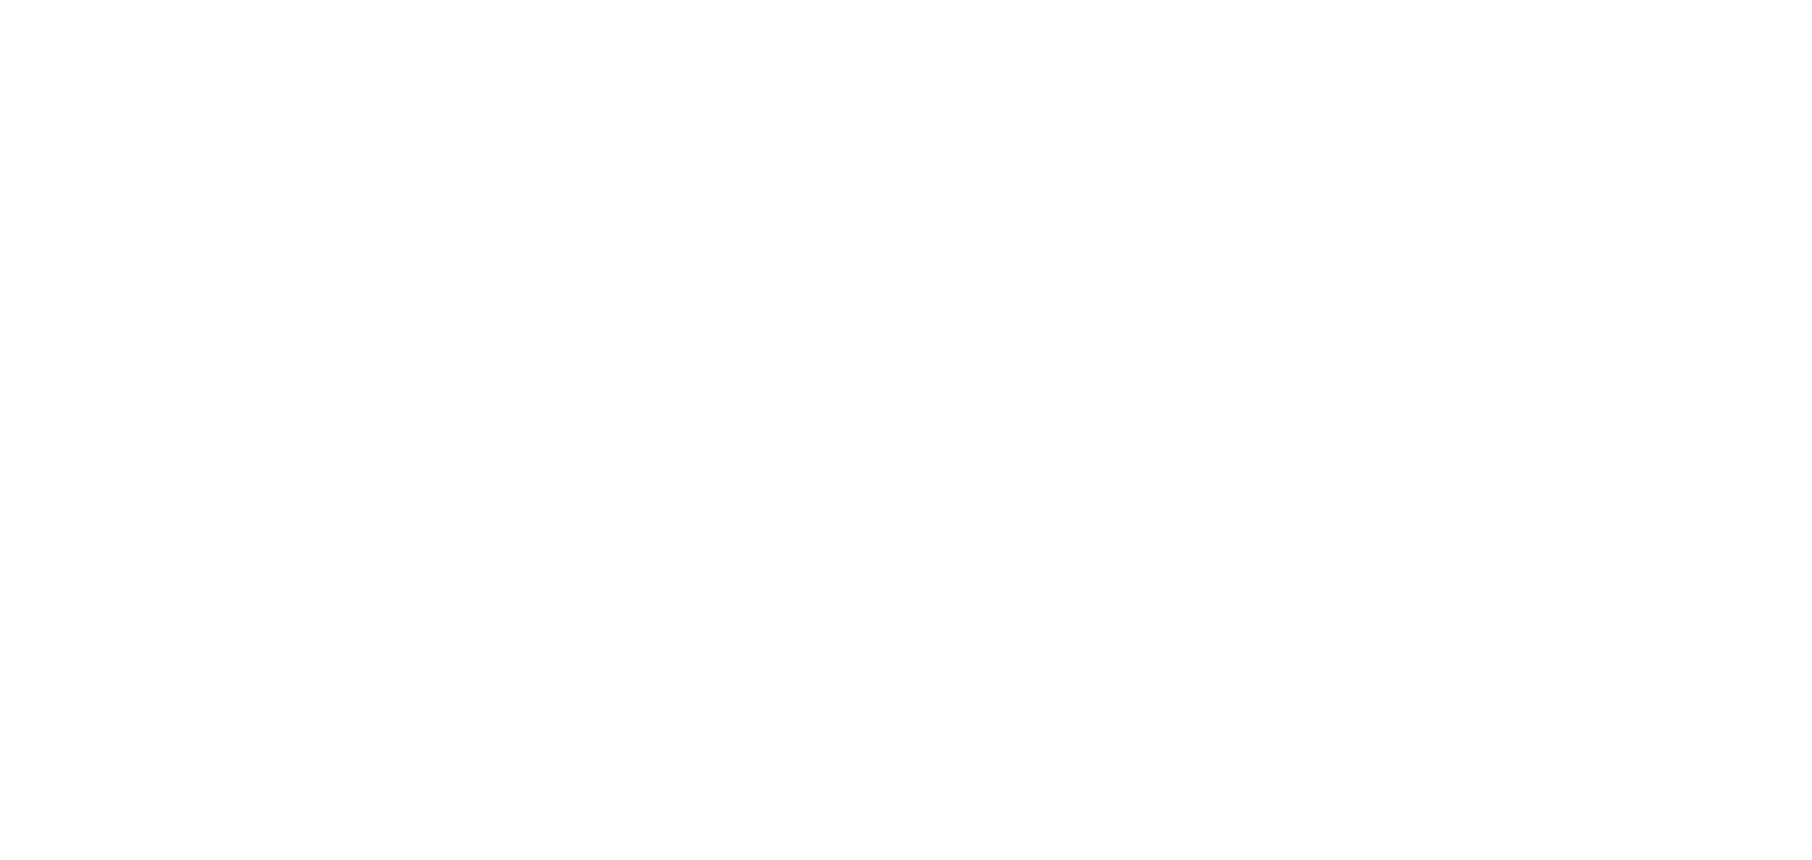 Wicked Queer: Boston LGBT Film Festival laurel